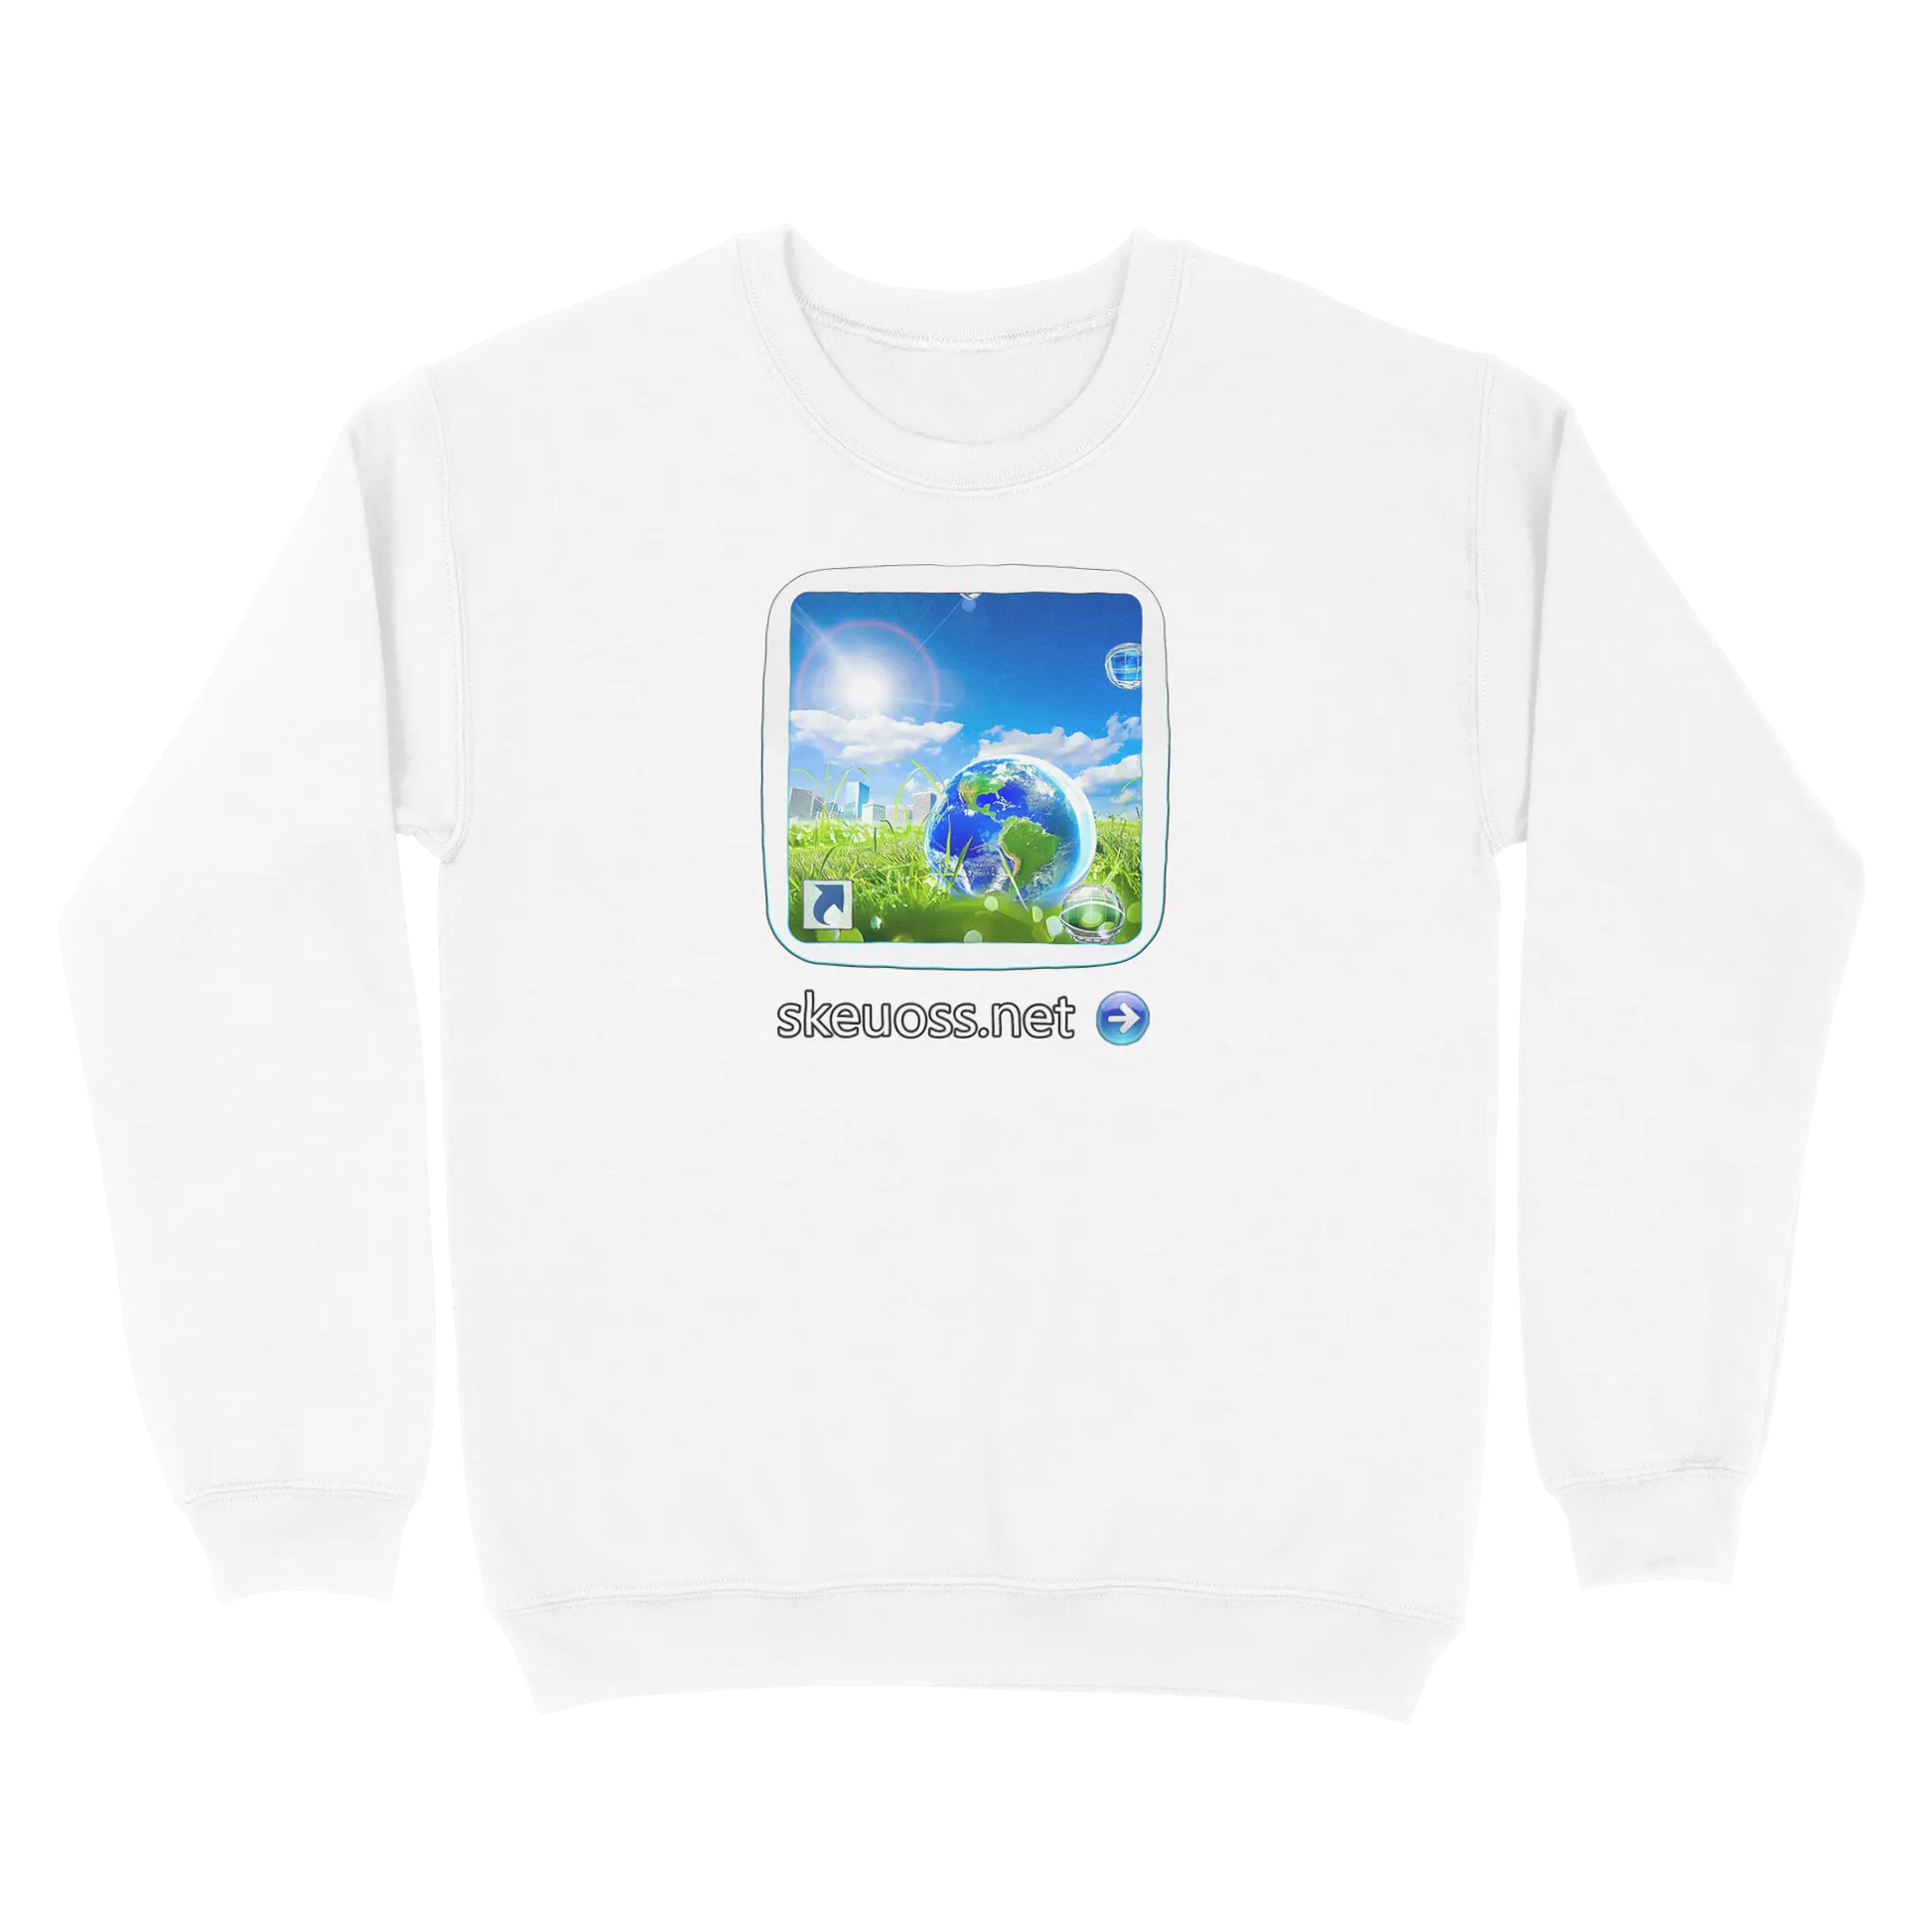 Frutiger Aero Sweatshirt - User Login Collection - User 281